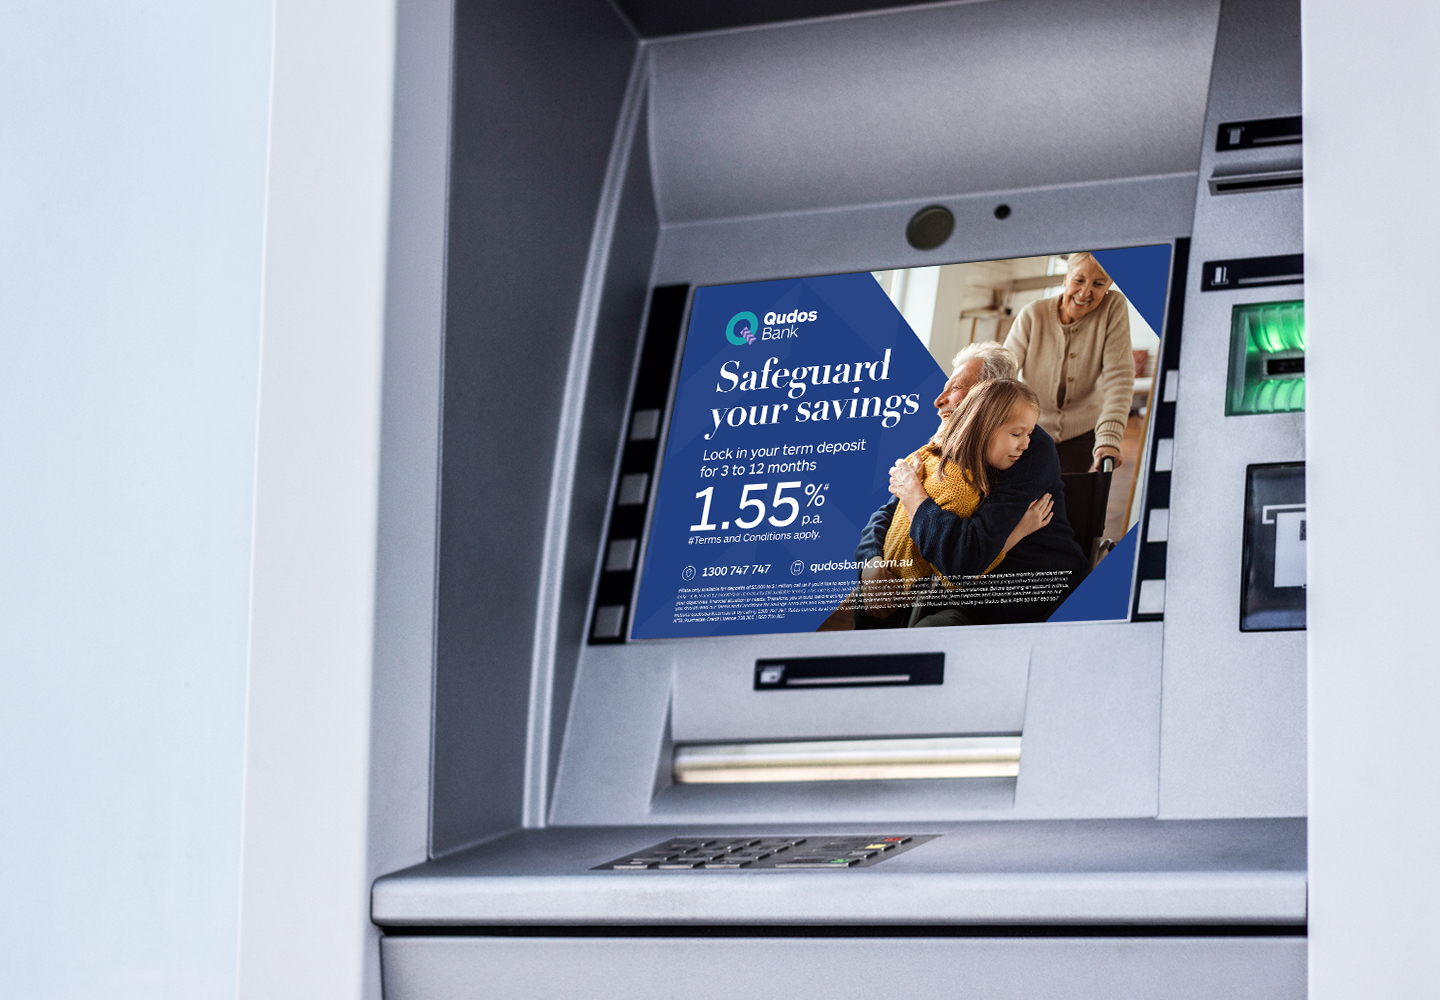 Qudos Bank ATM screen campaign